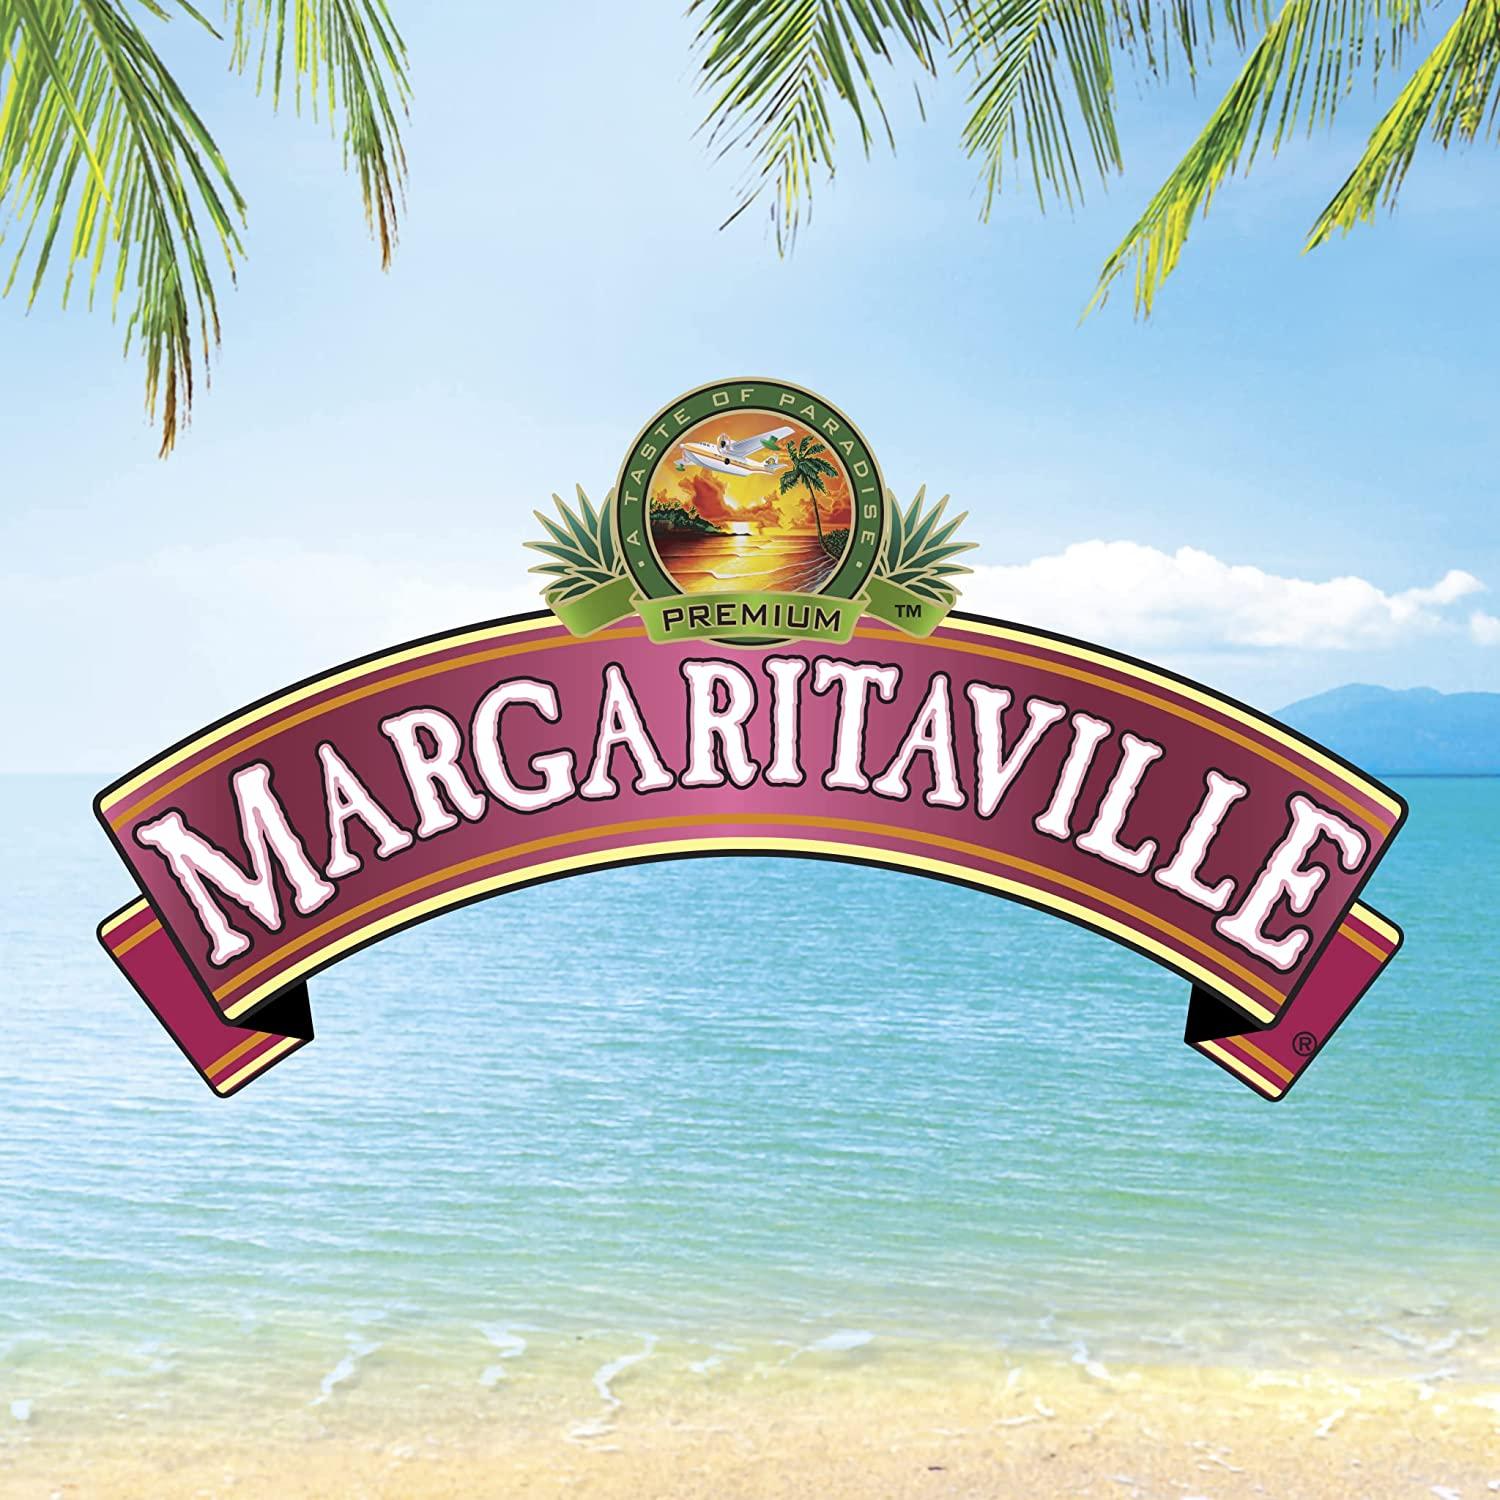 Margaritaville Margarita Singles to Go Drink Mix